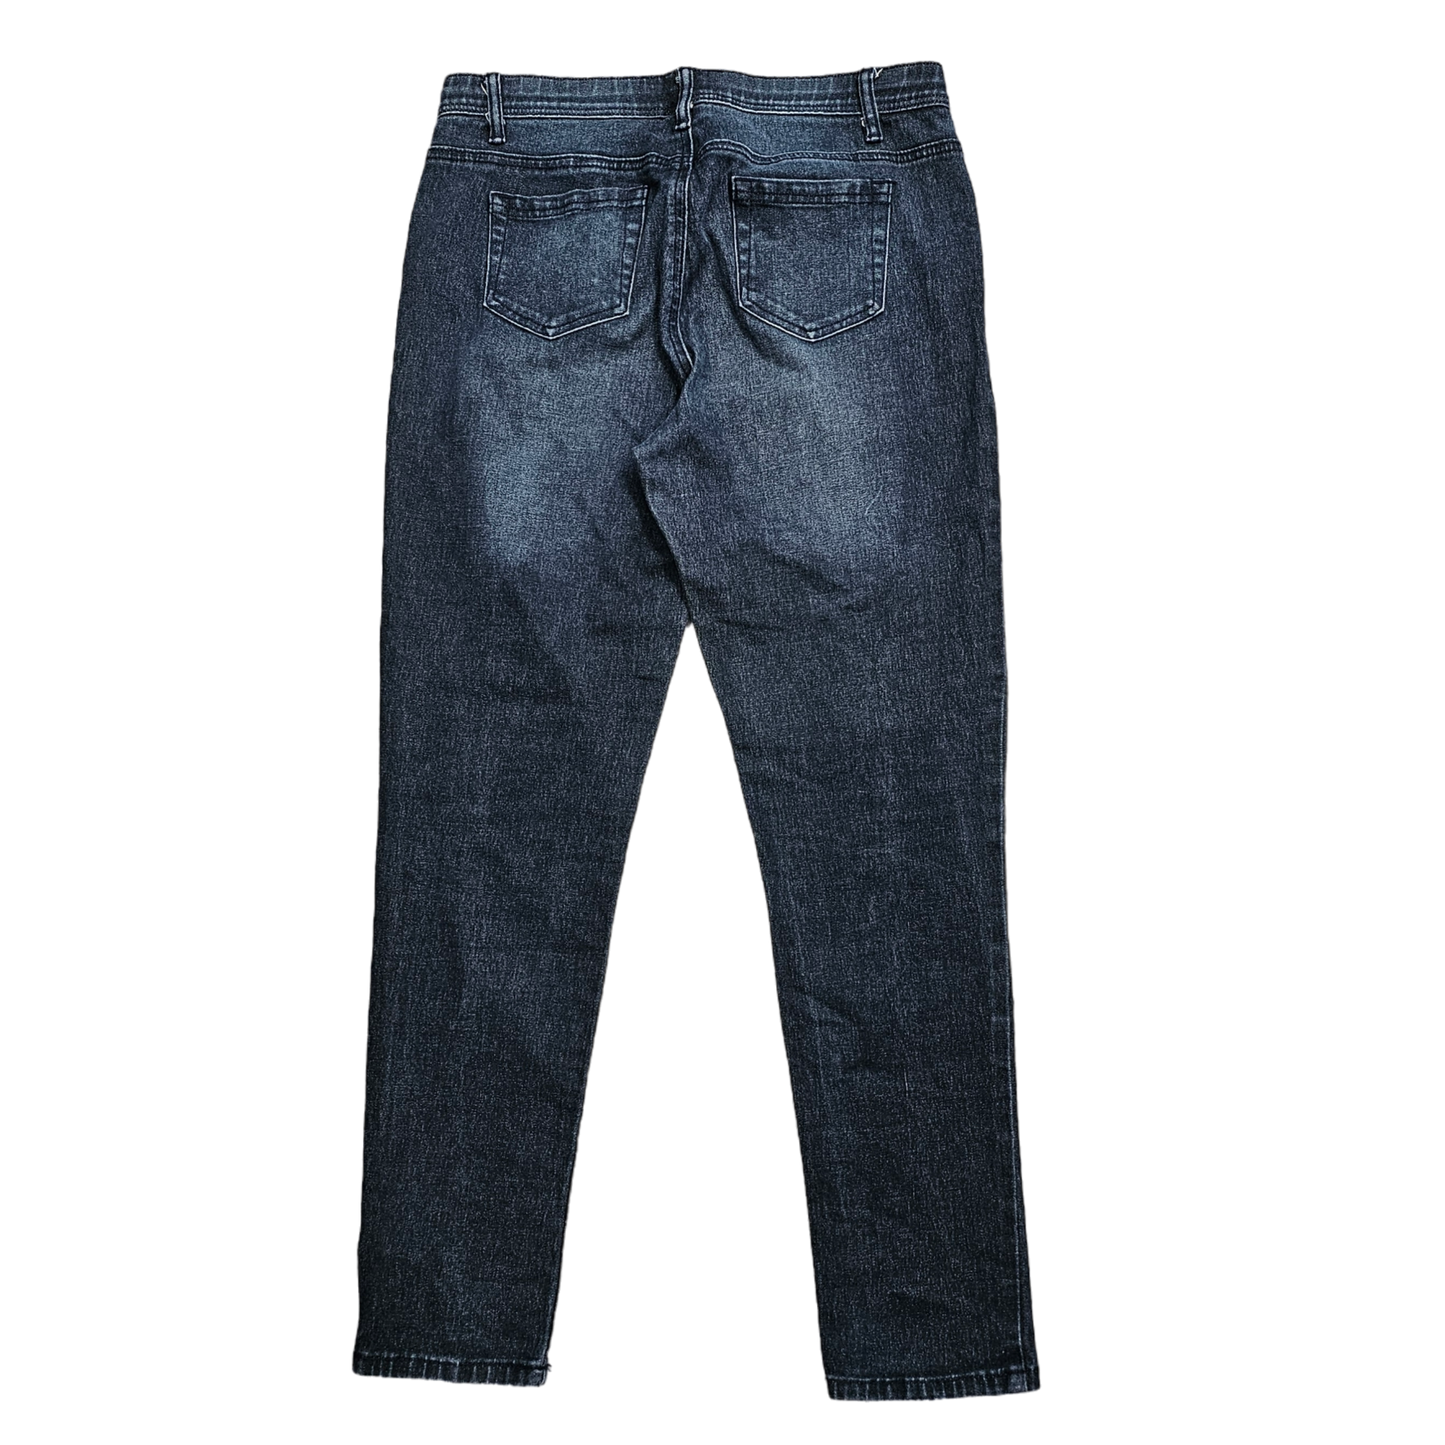 Jeans Skinny By Diane Gilman  Size: M